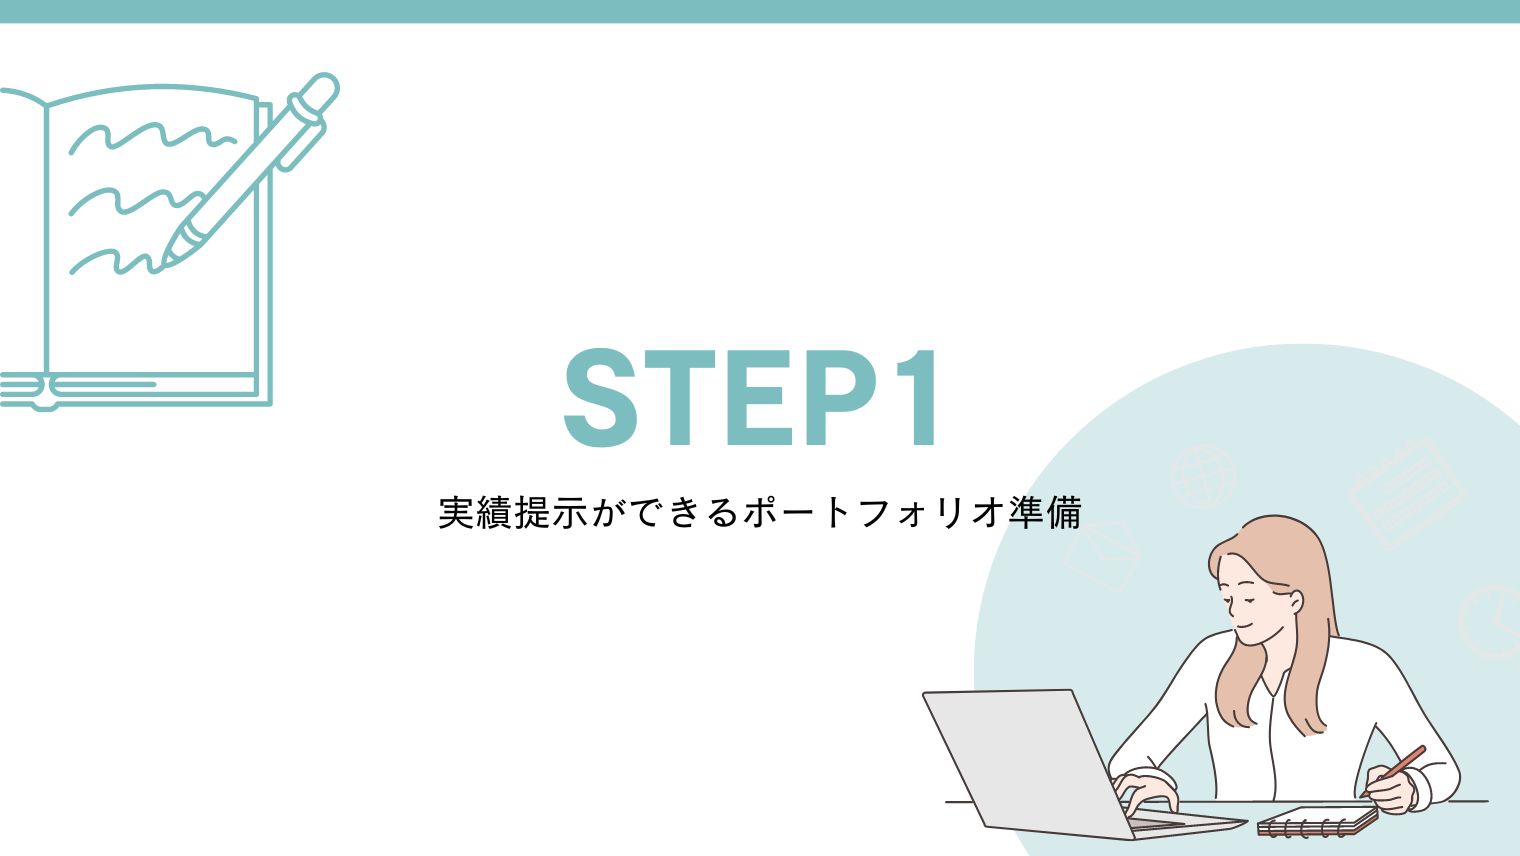 STEP01.ポートフォリオ・ブログを作り、実績提示ができるように準備